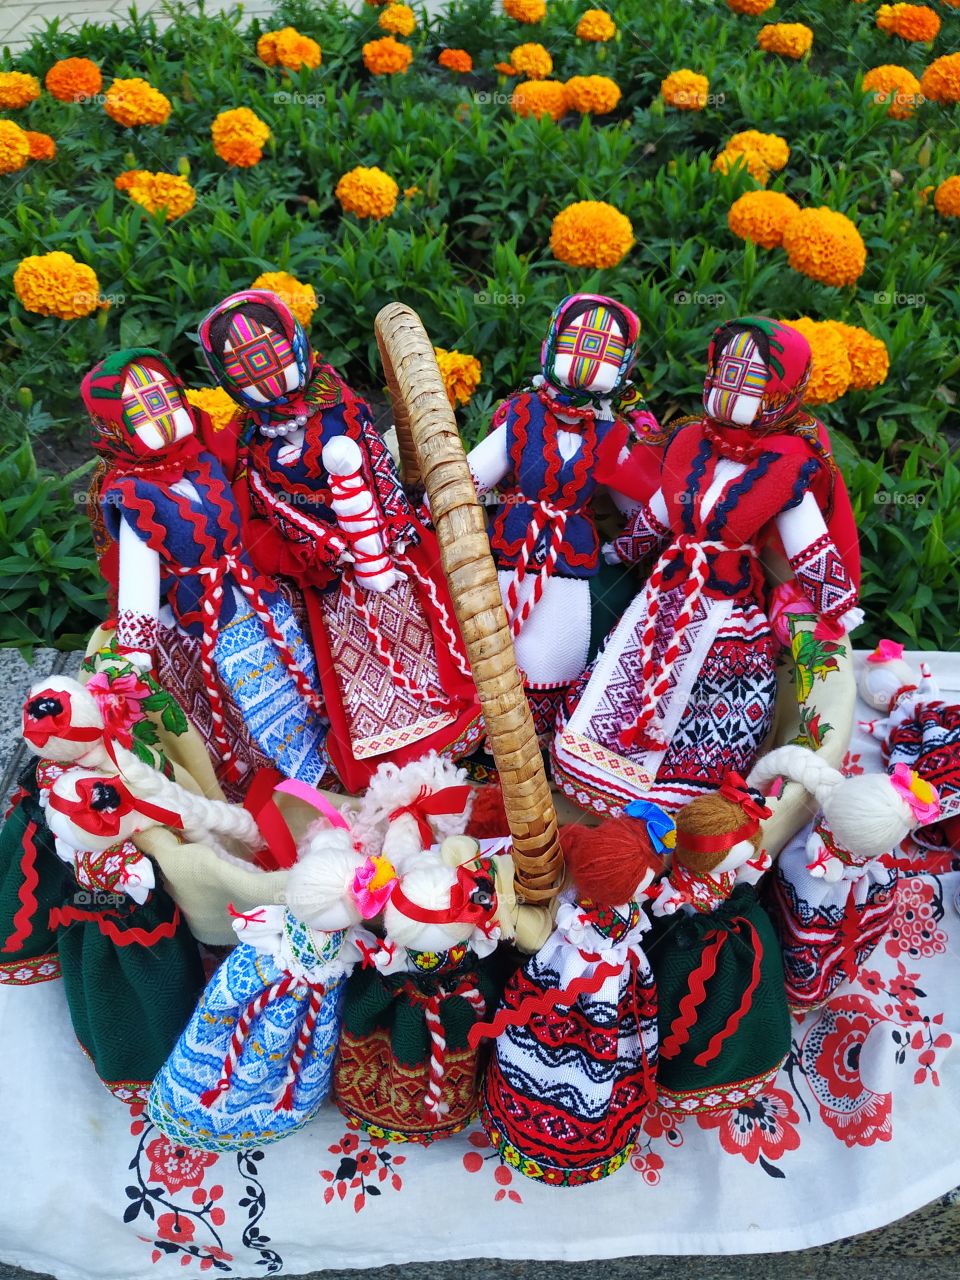 National dolls. Ukraine